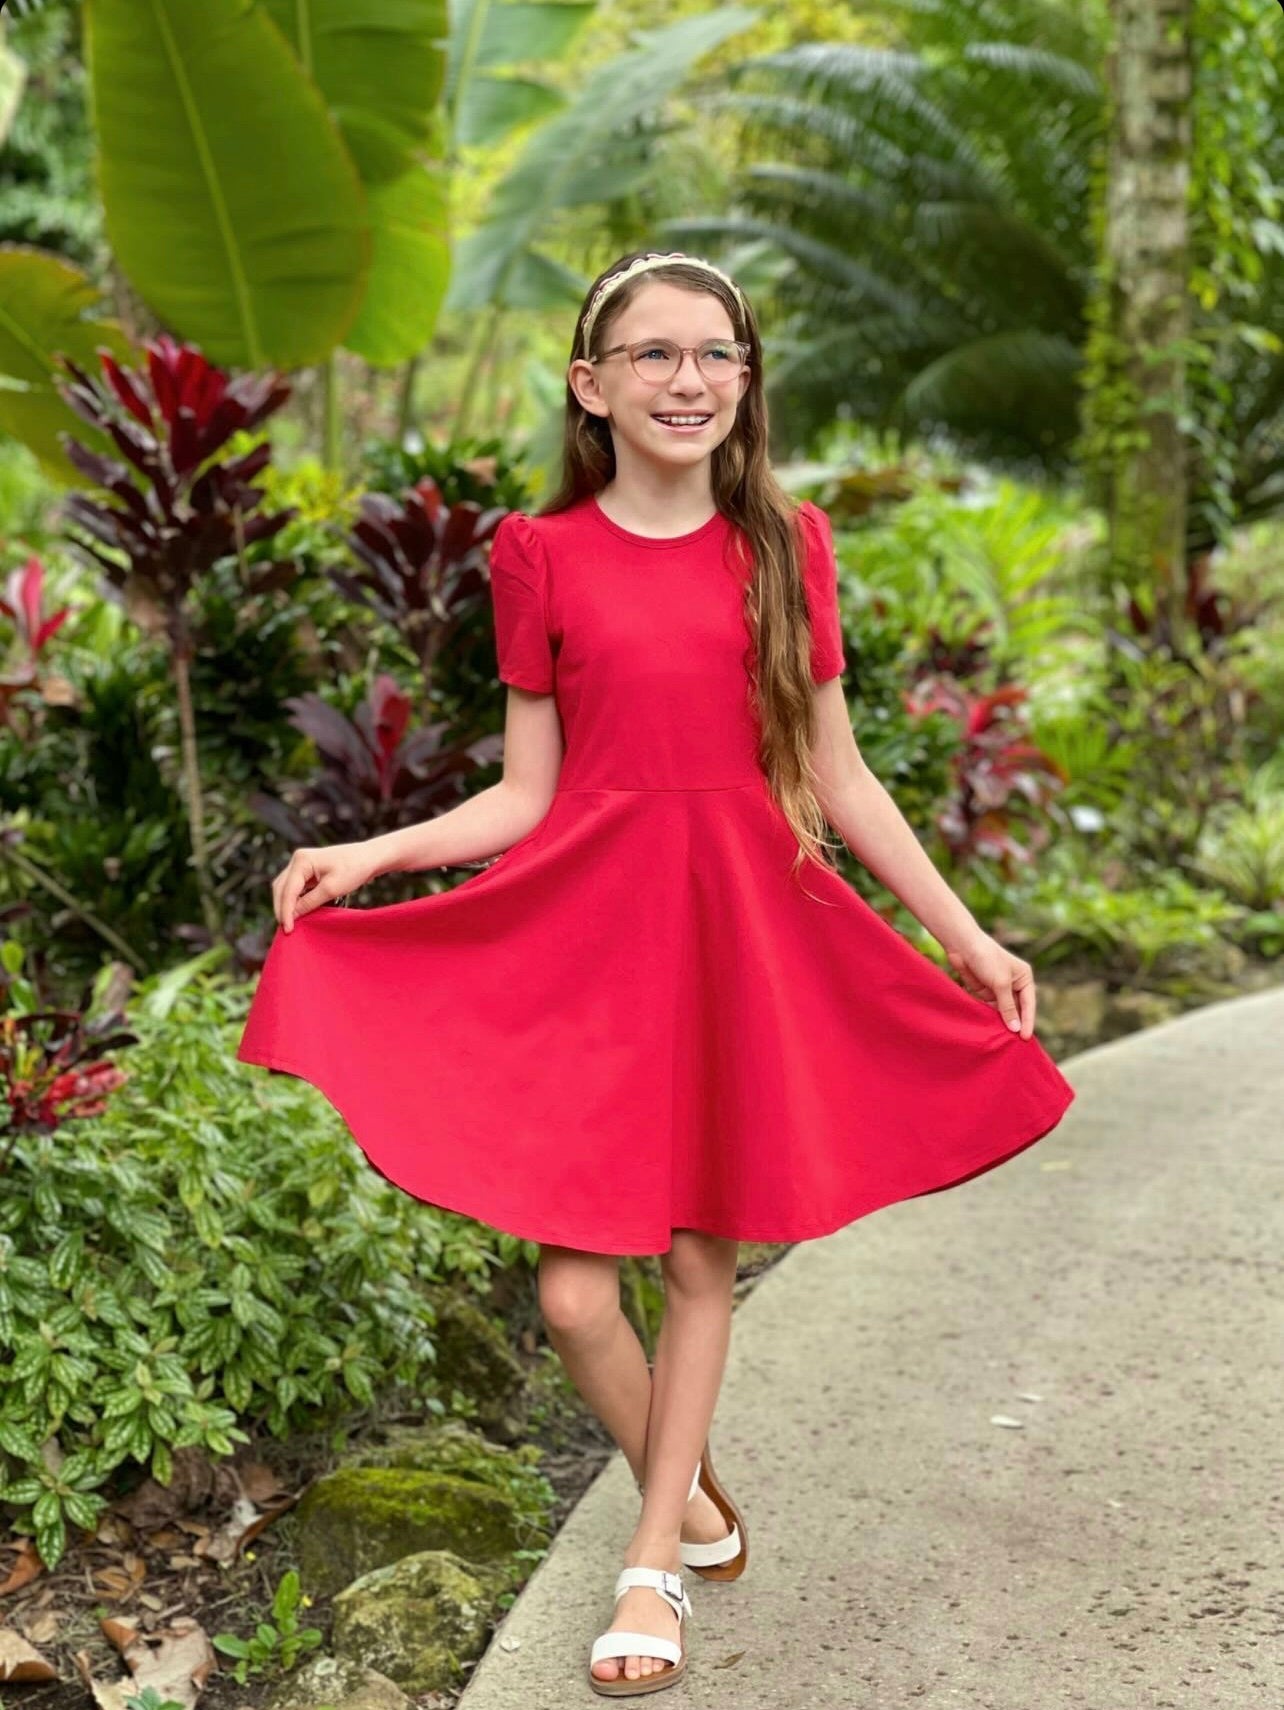 Girl posing in a red dress in a garden.